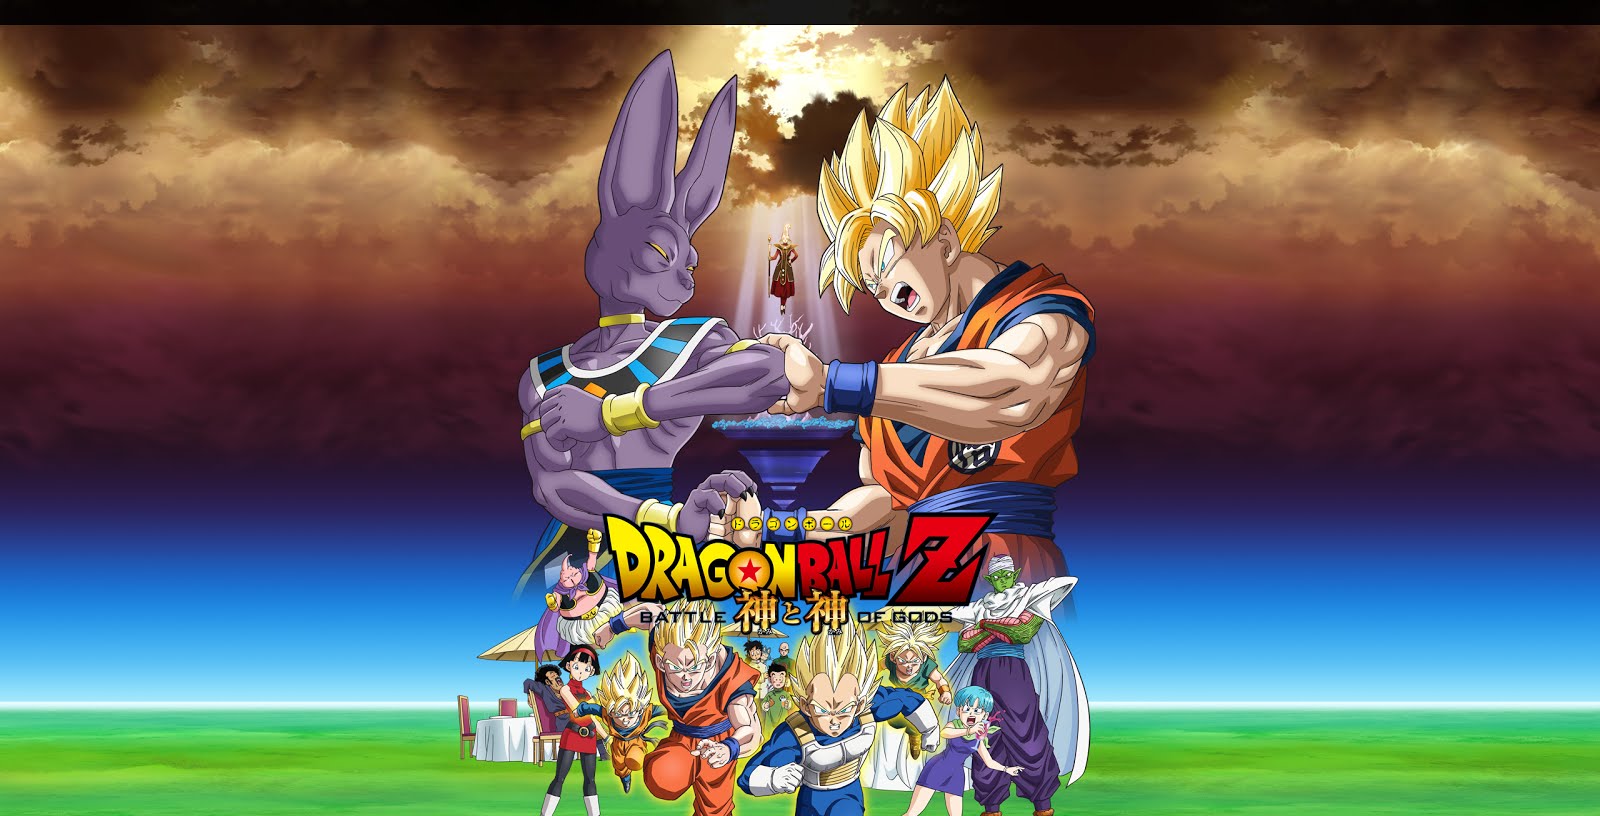 Dragon Ball Z Battle Of Gods Dragon Ball Z Battle Of Gods Extended Edition Each Disc